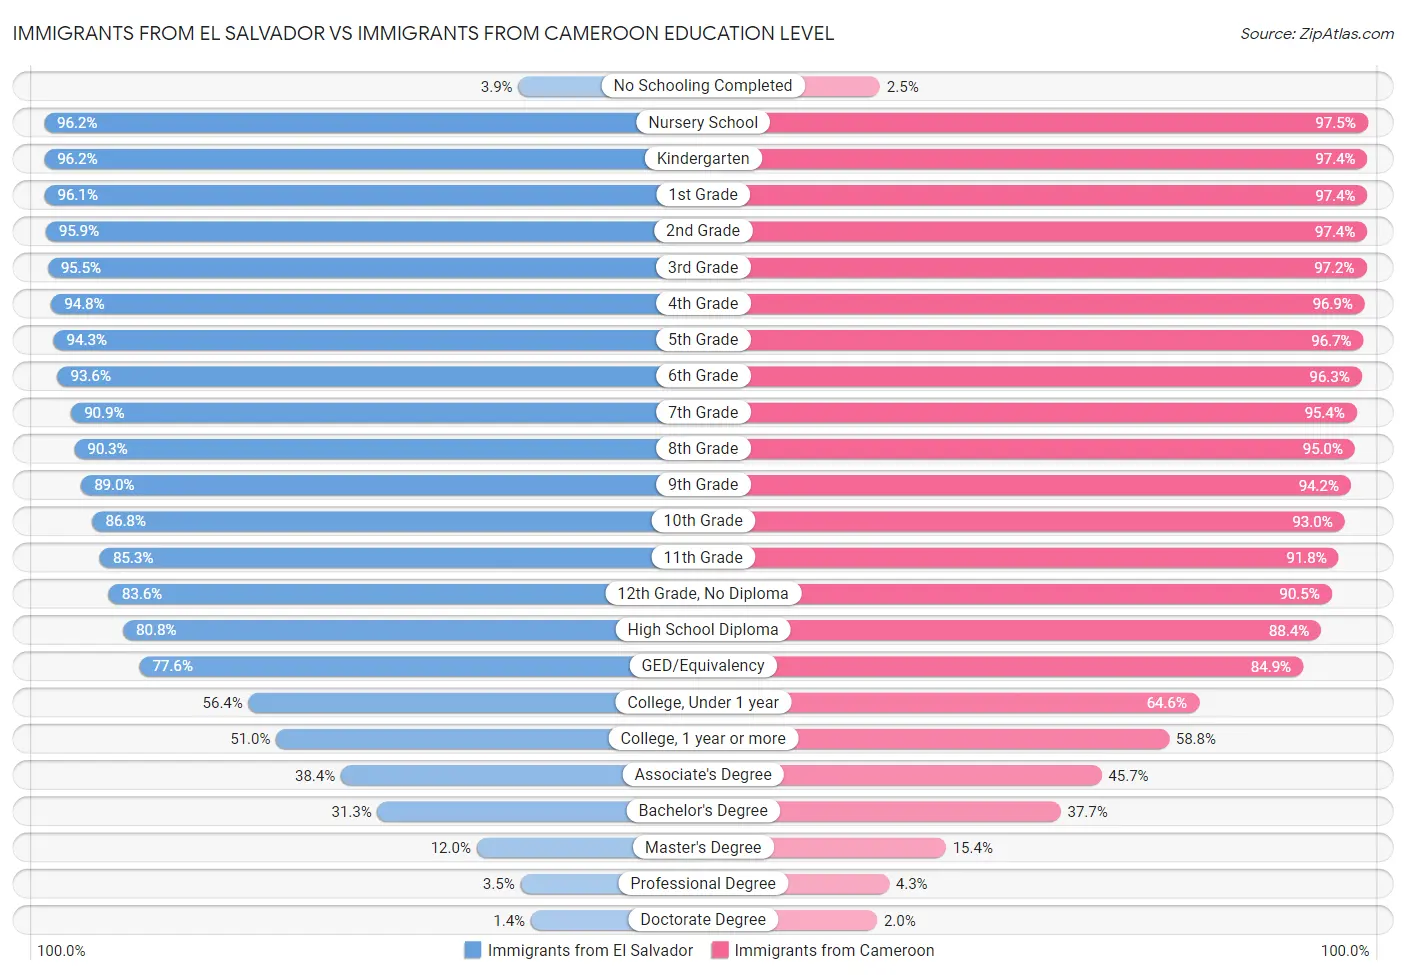 Immigrants from El Salvador vs Immigrants from Cameroon Education Level